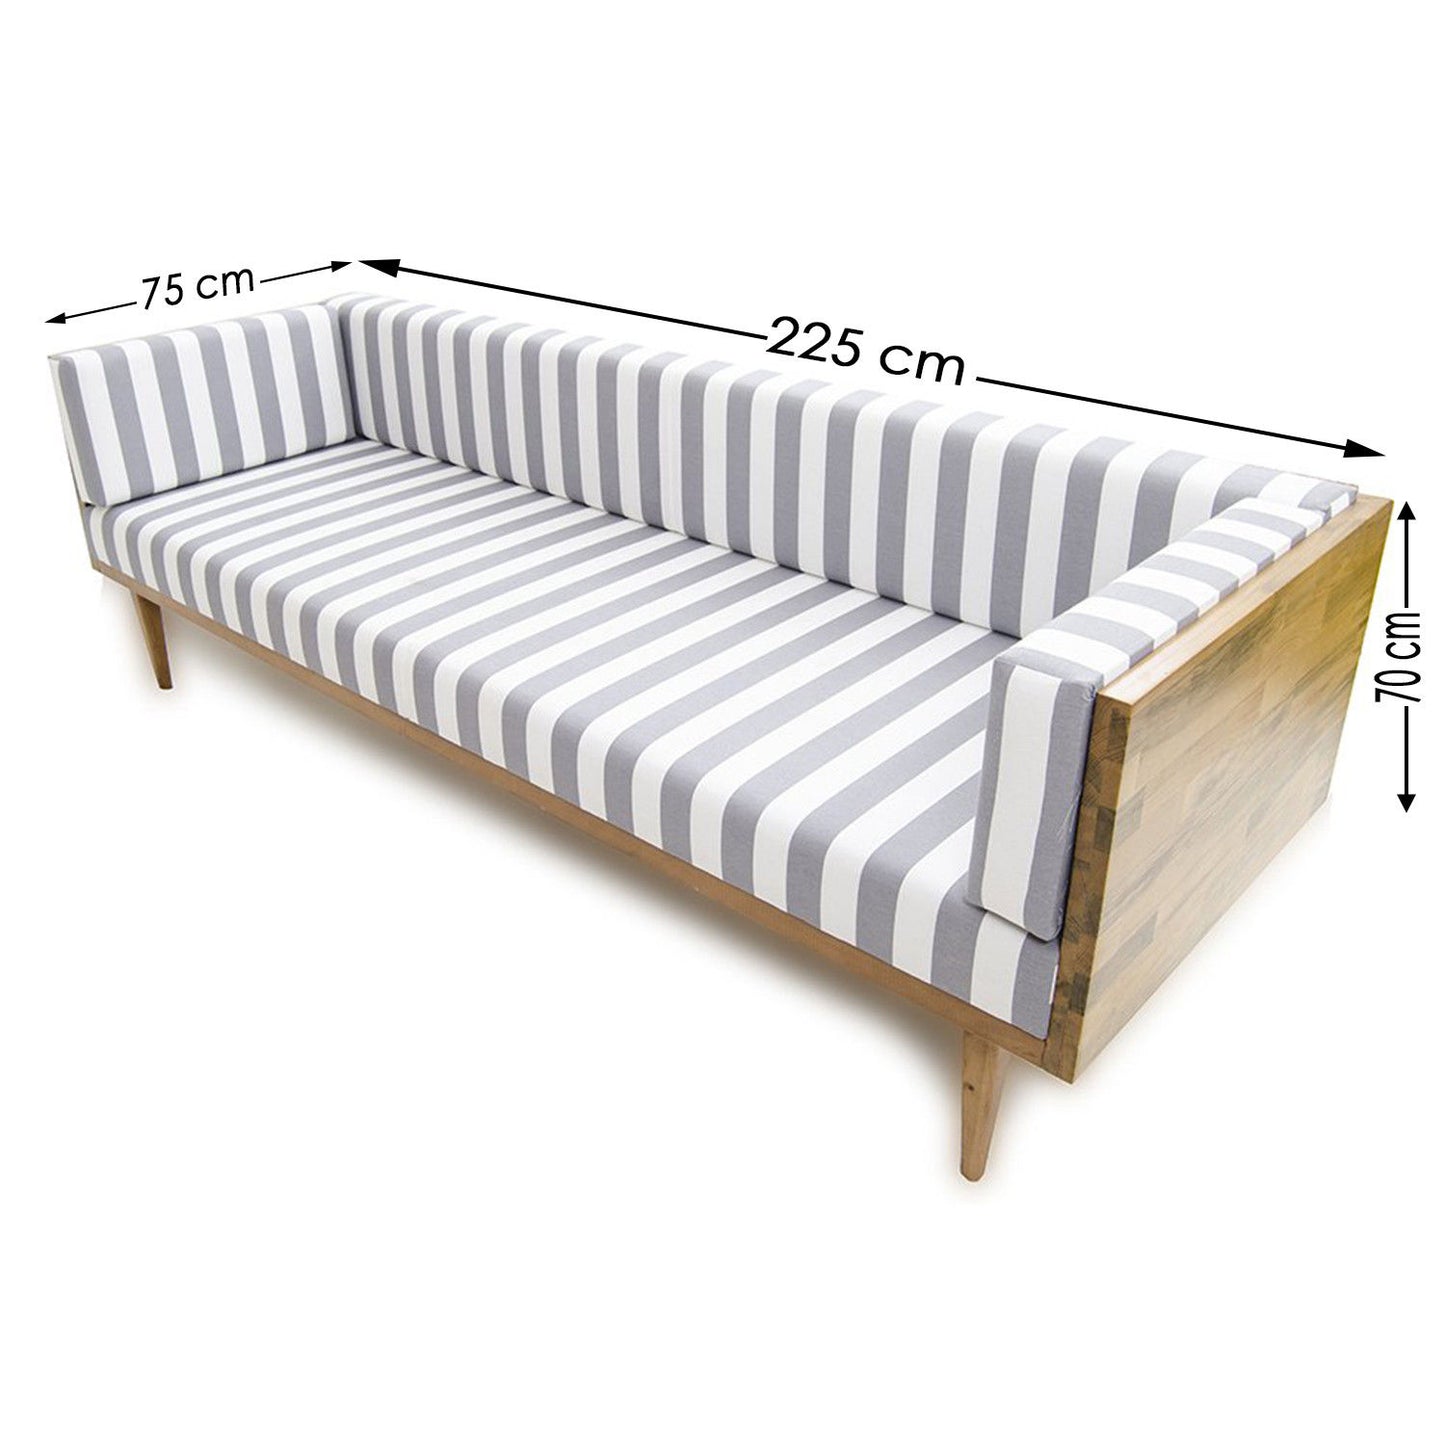 Cocos Large - 3-sæders sofa